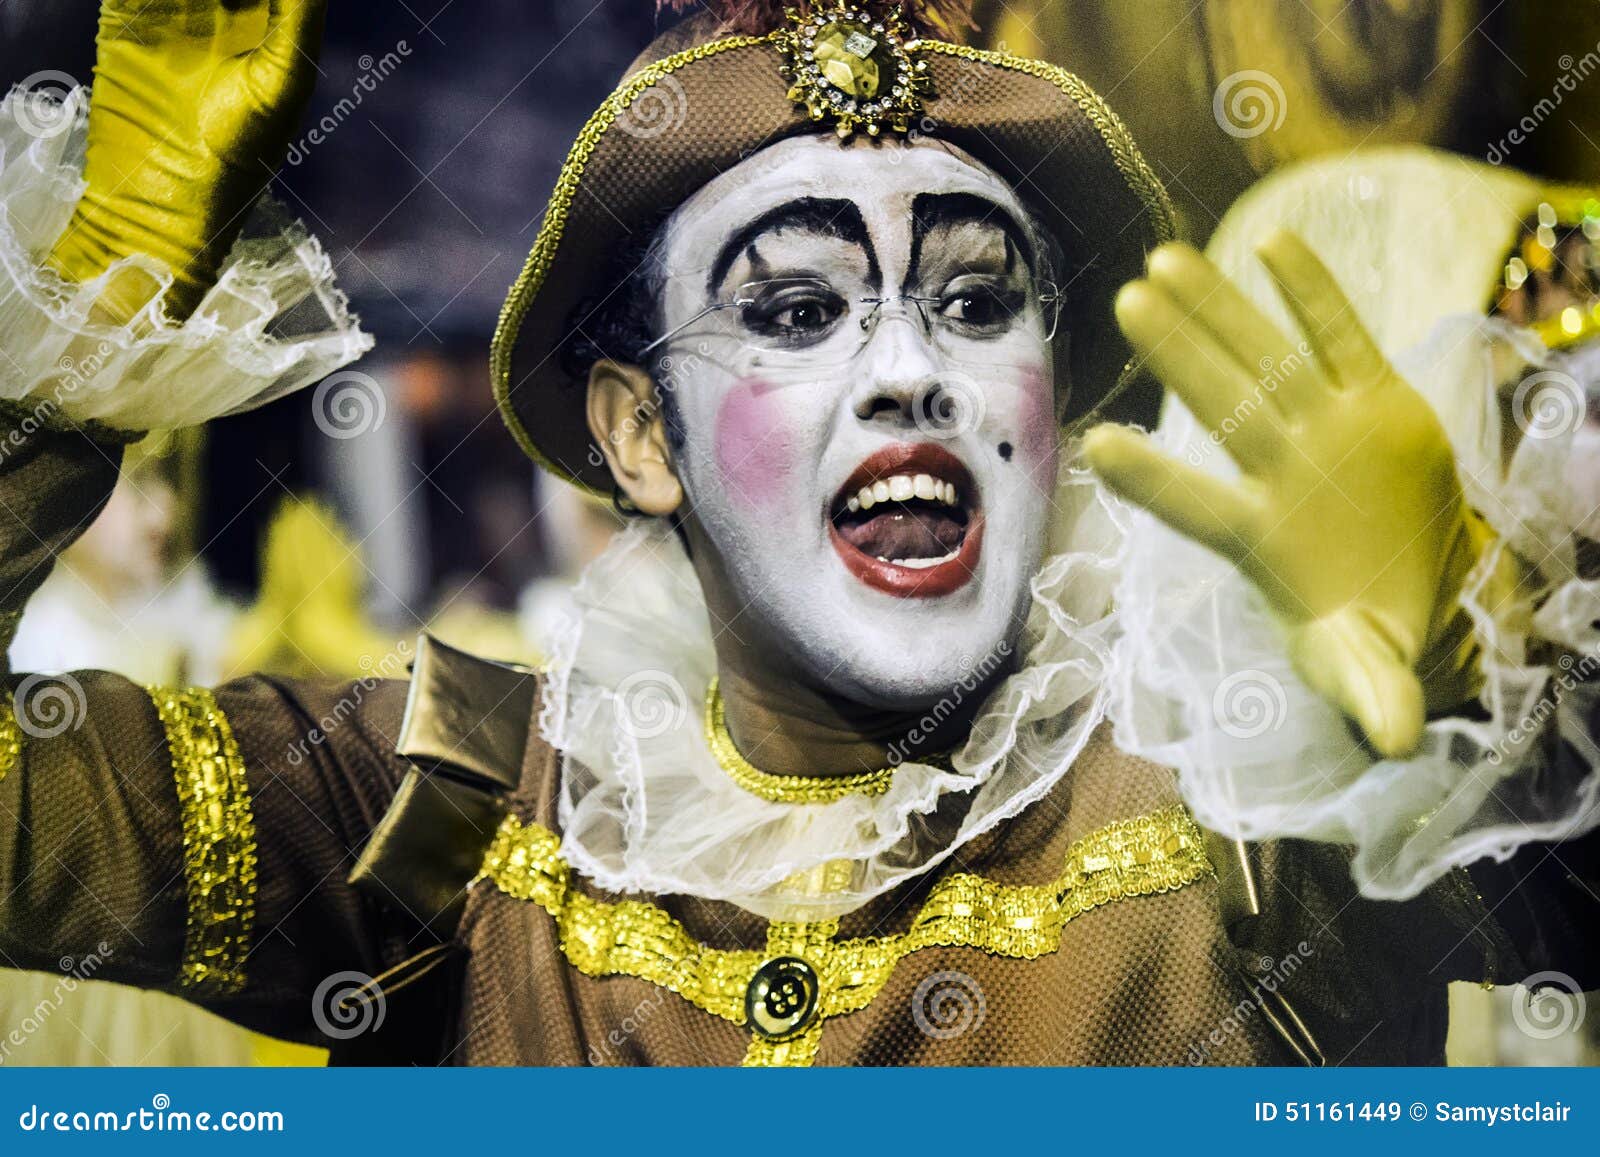 Mocidade Alegre - Carnaval - São <b>Paulo, Brasil</b> - 2015 Editorial Stock Image - mocidade-alegre-carnaval-paulo-brasil-samba-dancers-costume-parading-samba-school-held-sambodromo-do-51161449